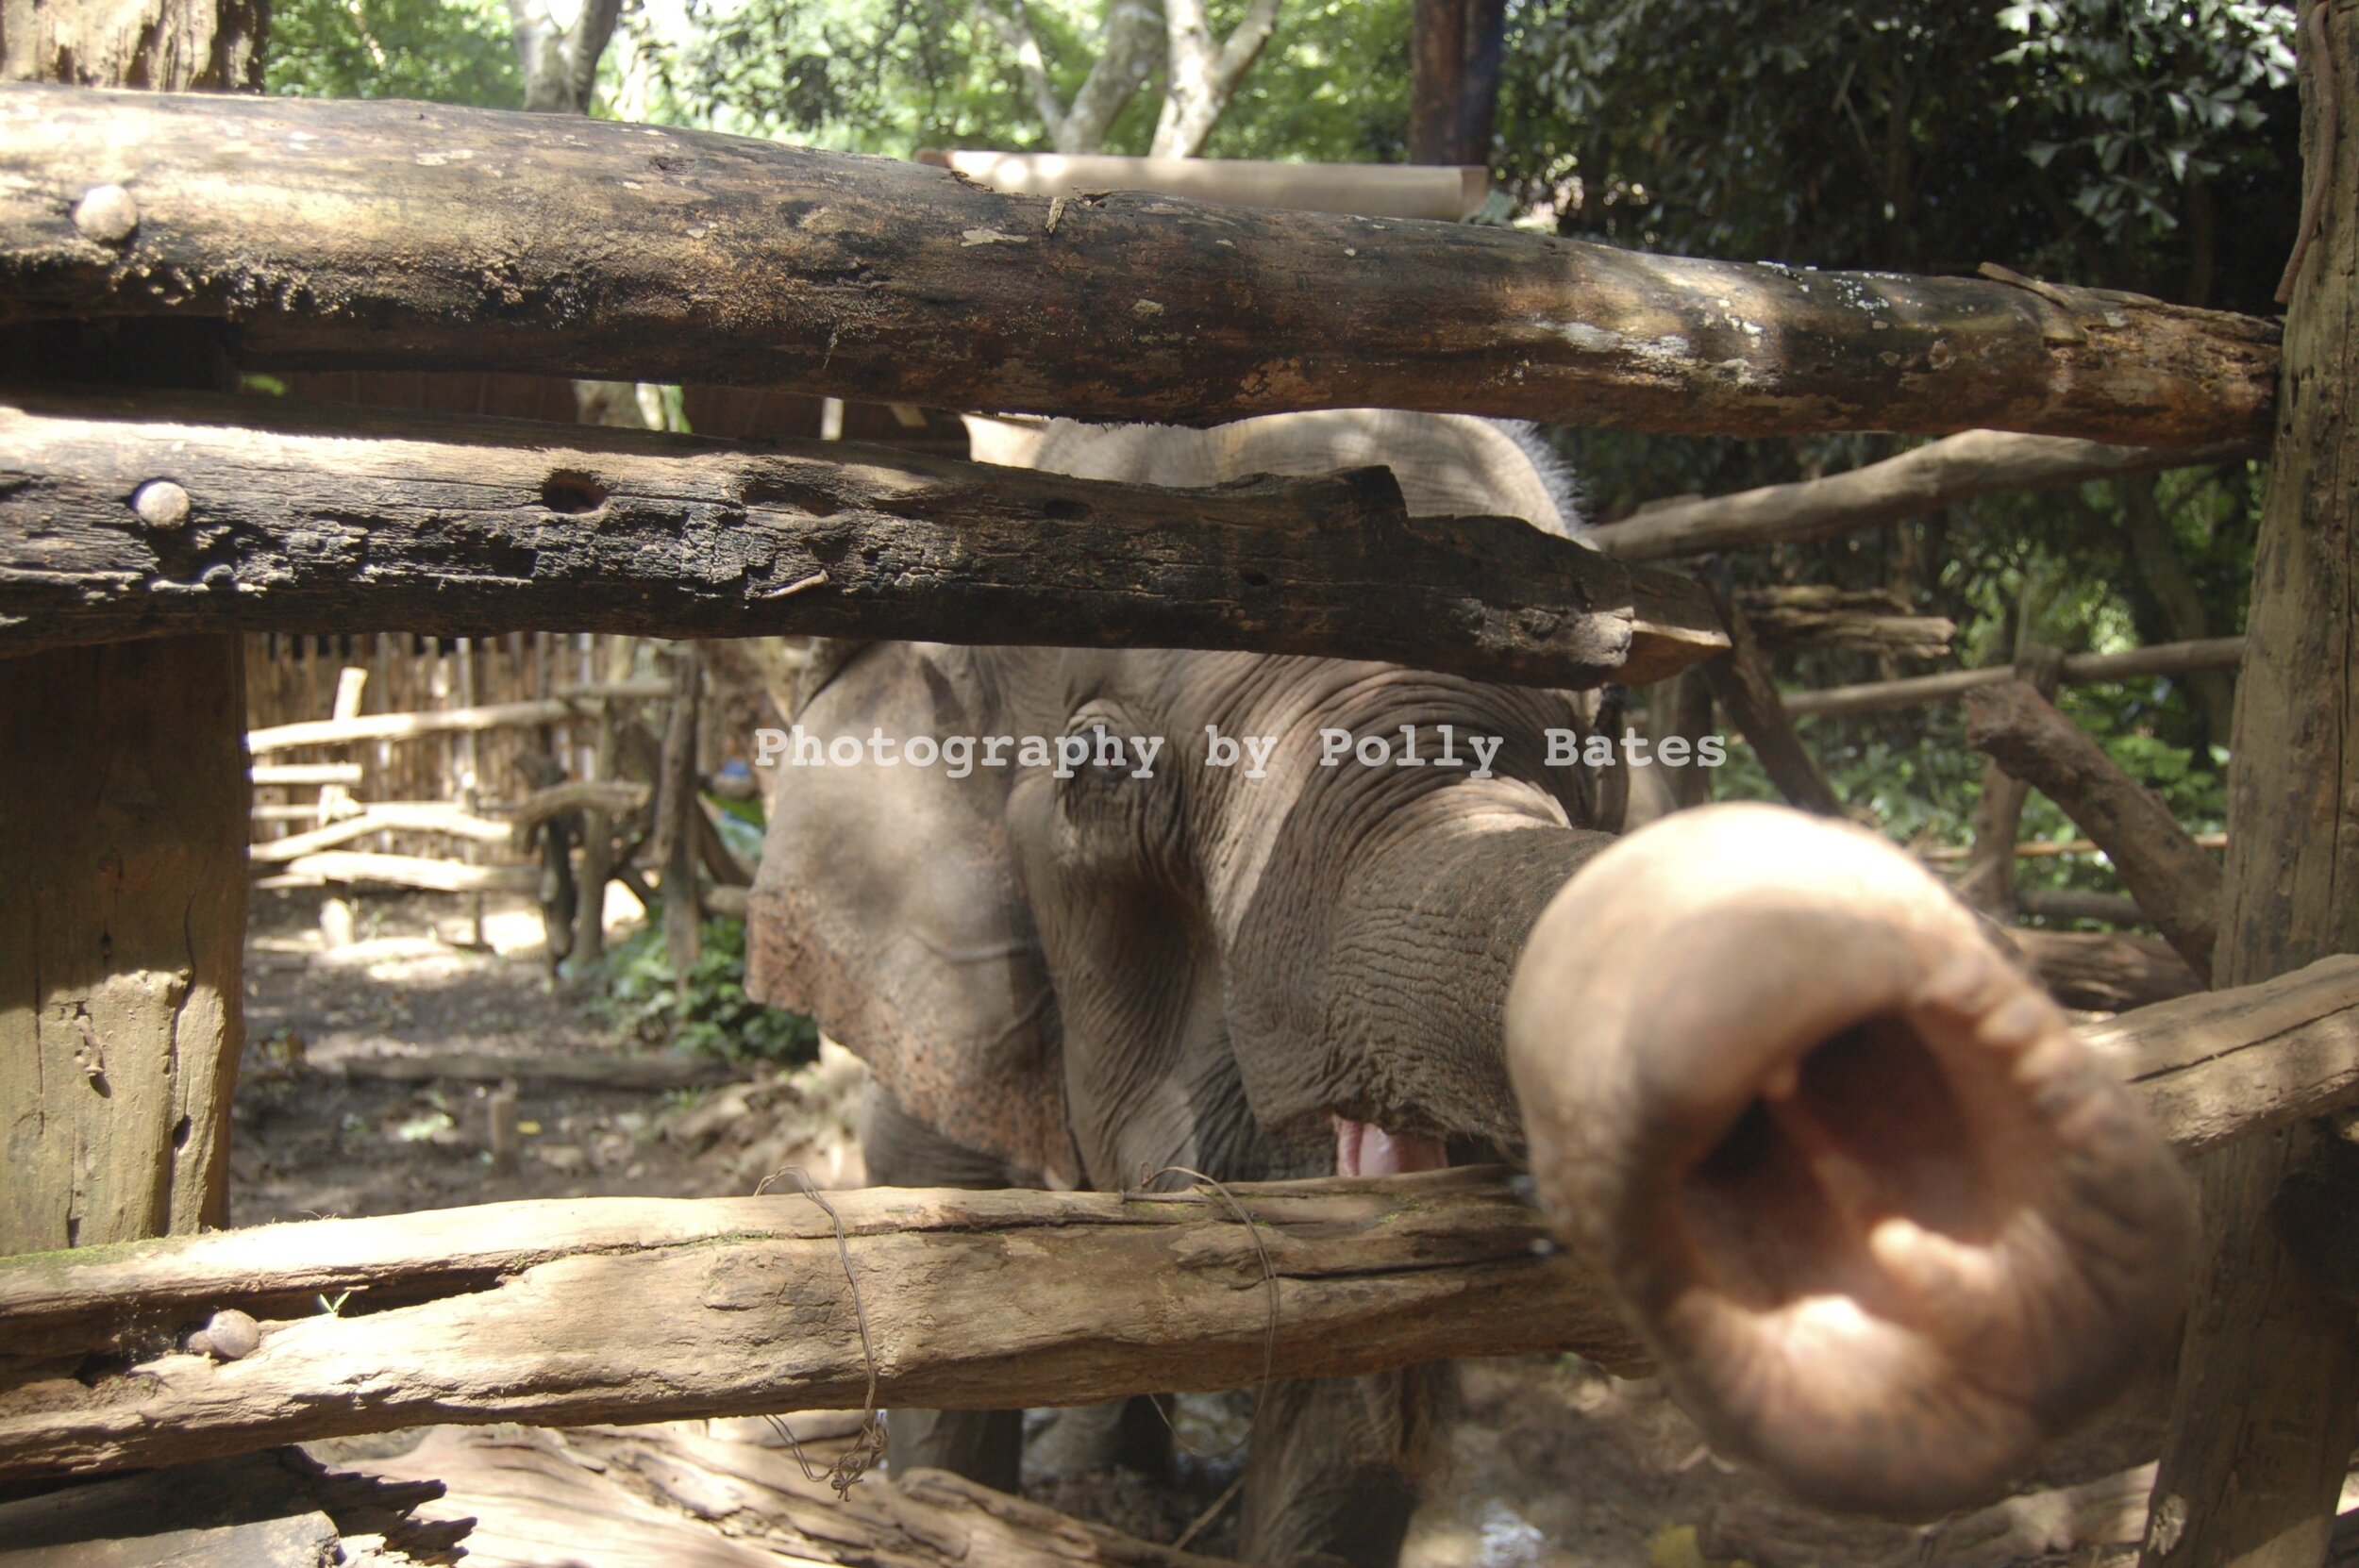 Polly Bates Elephant Photography 1.jpg